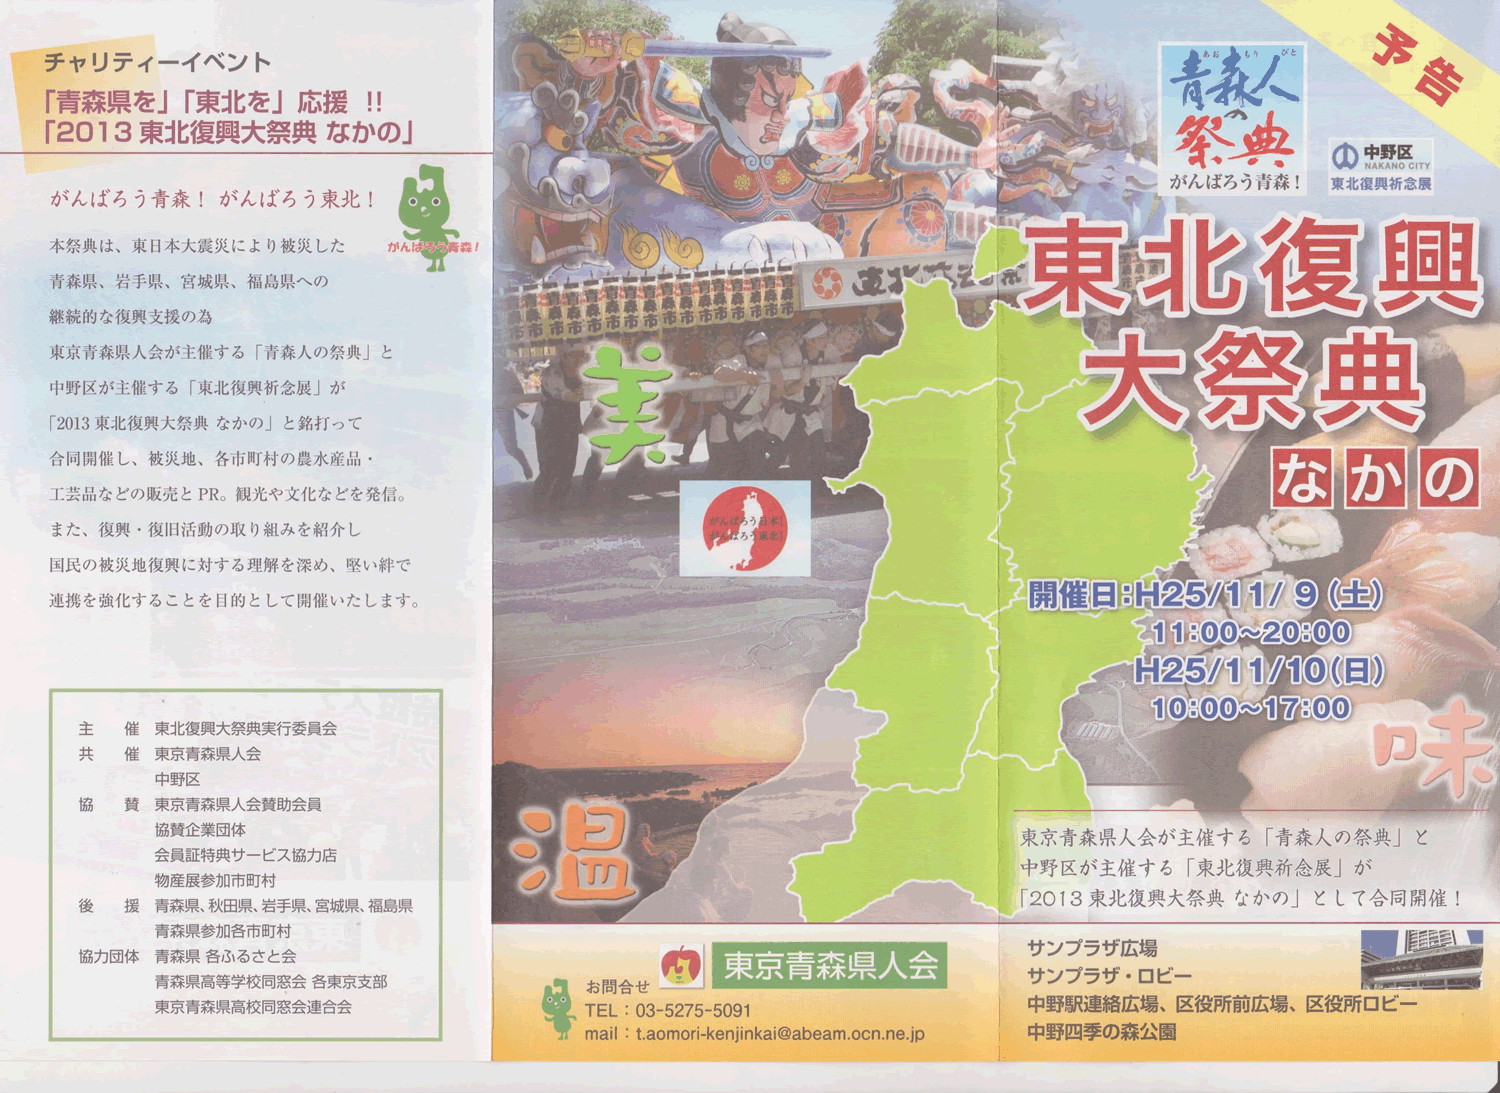 1109nakano - １１月９日、１０日青森人の祭典の開催に伴いボランティアスタッフを募集しています。